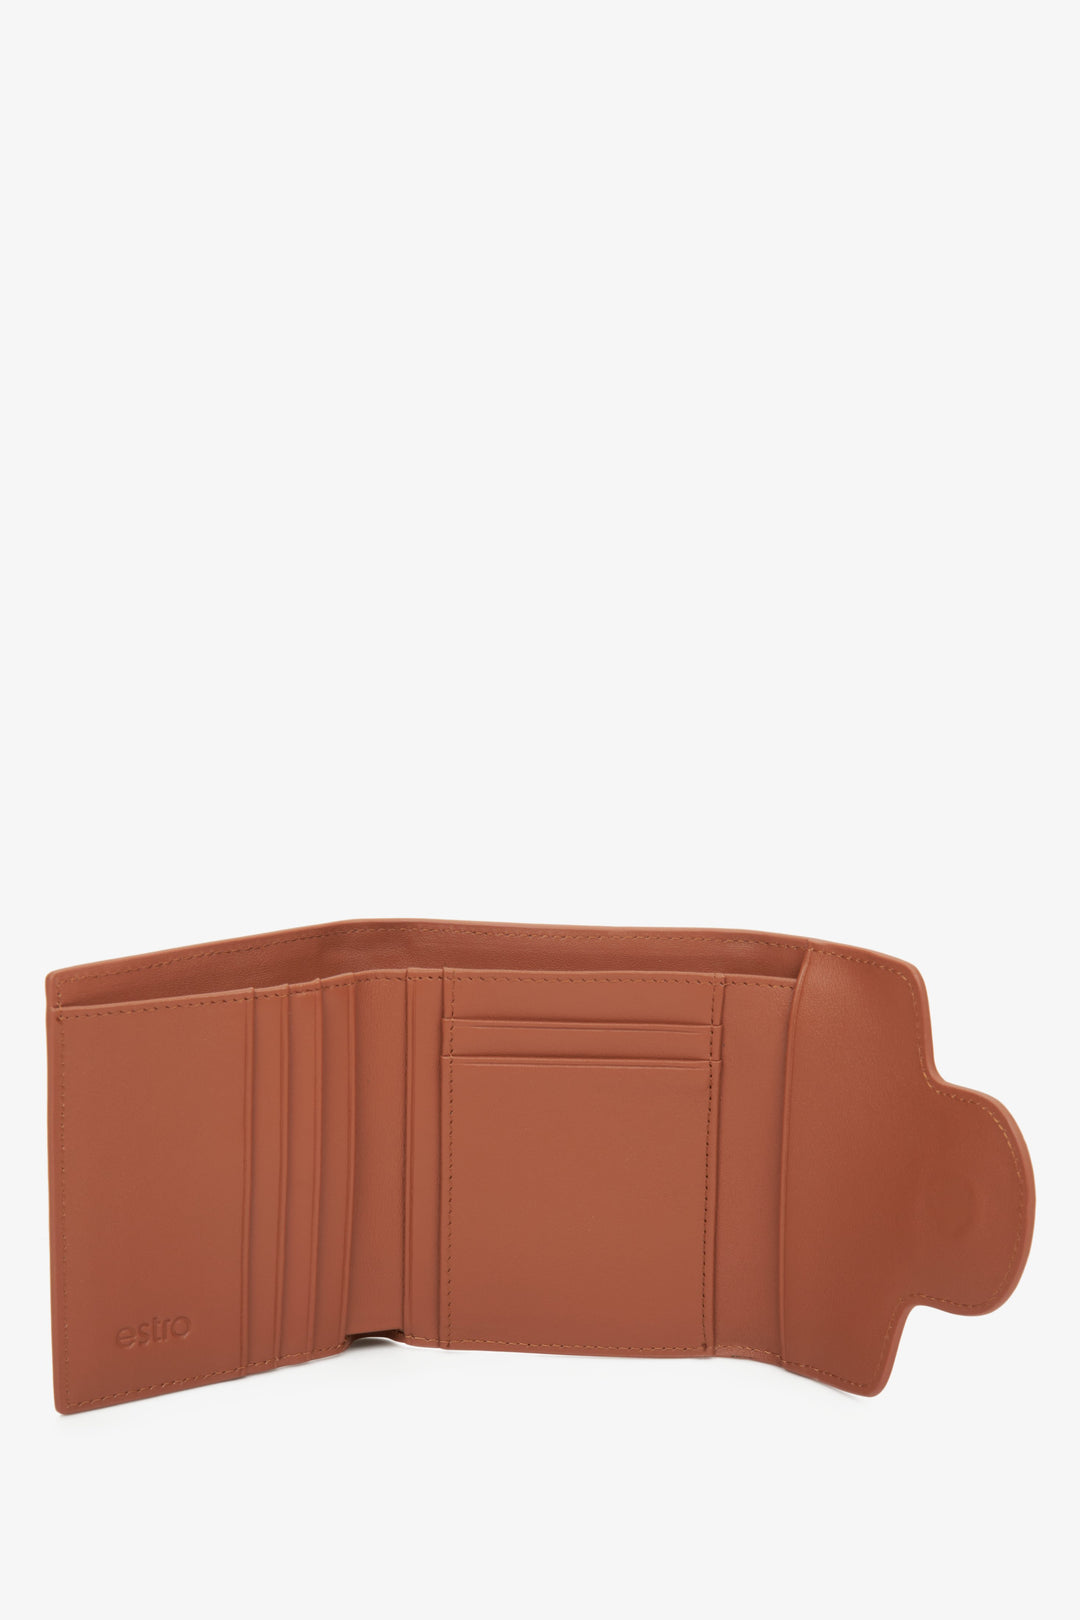 Estro women's brown-and-beige wallet - presentation of the interior model.